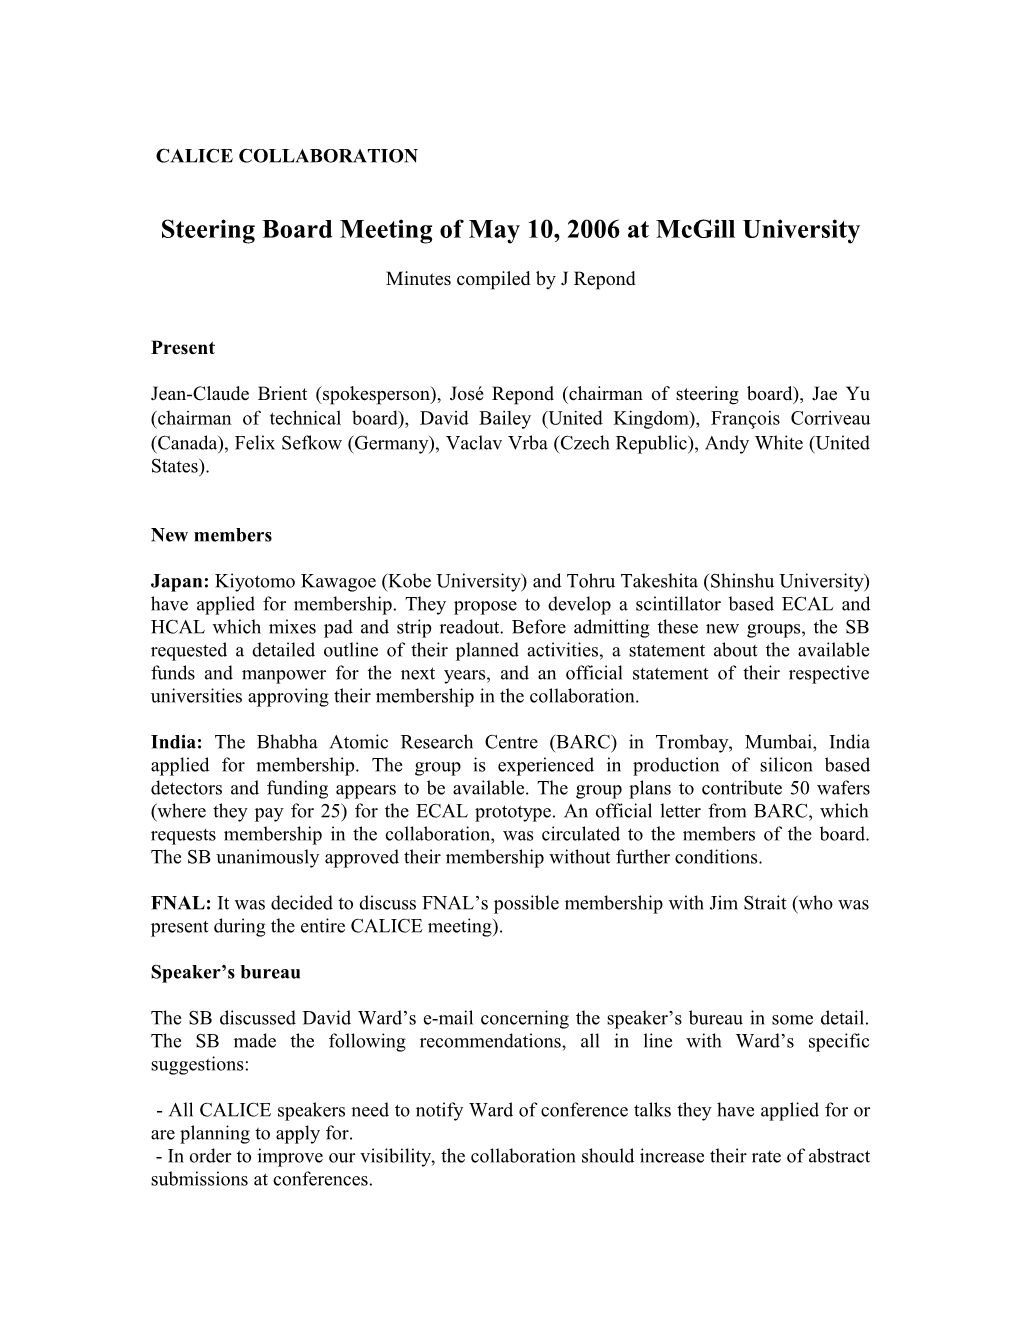 Steering Board Meeting of May 10, 2006 at Mcgill University